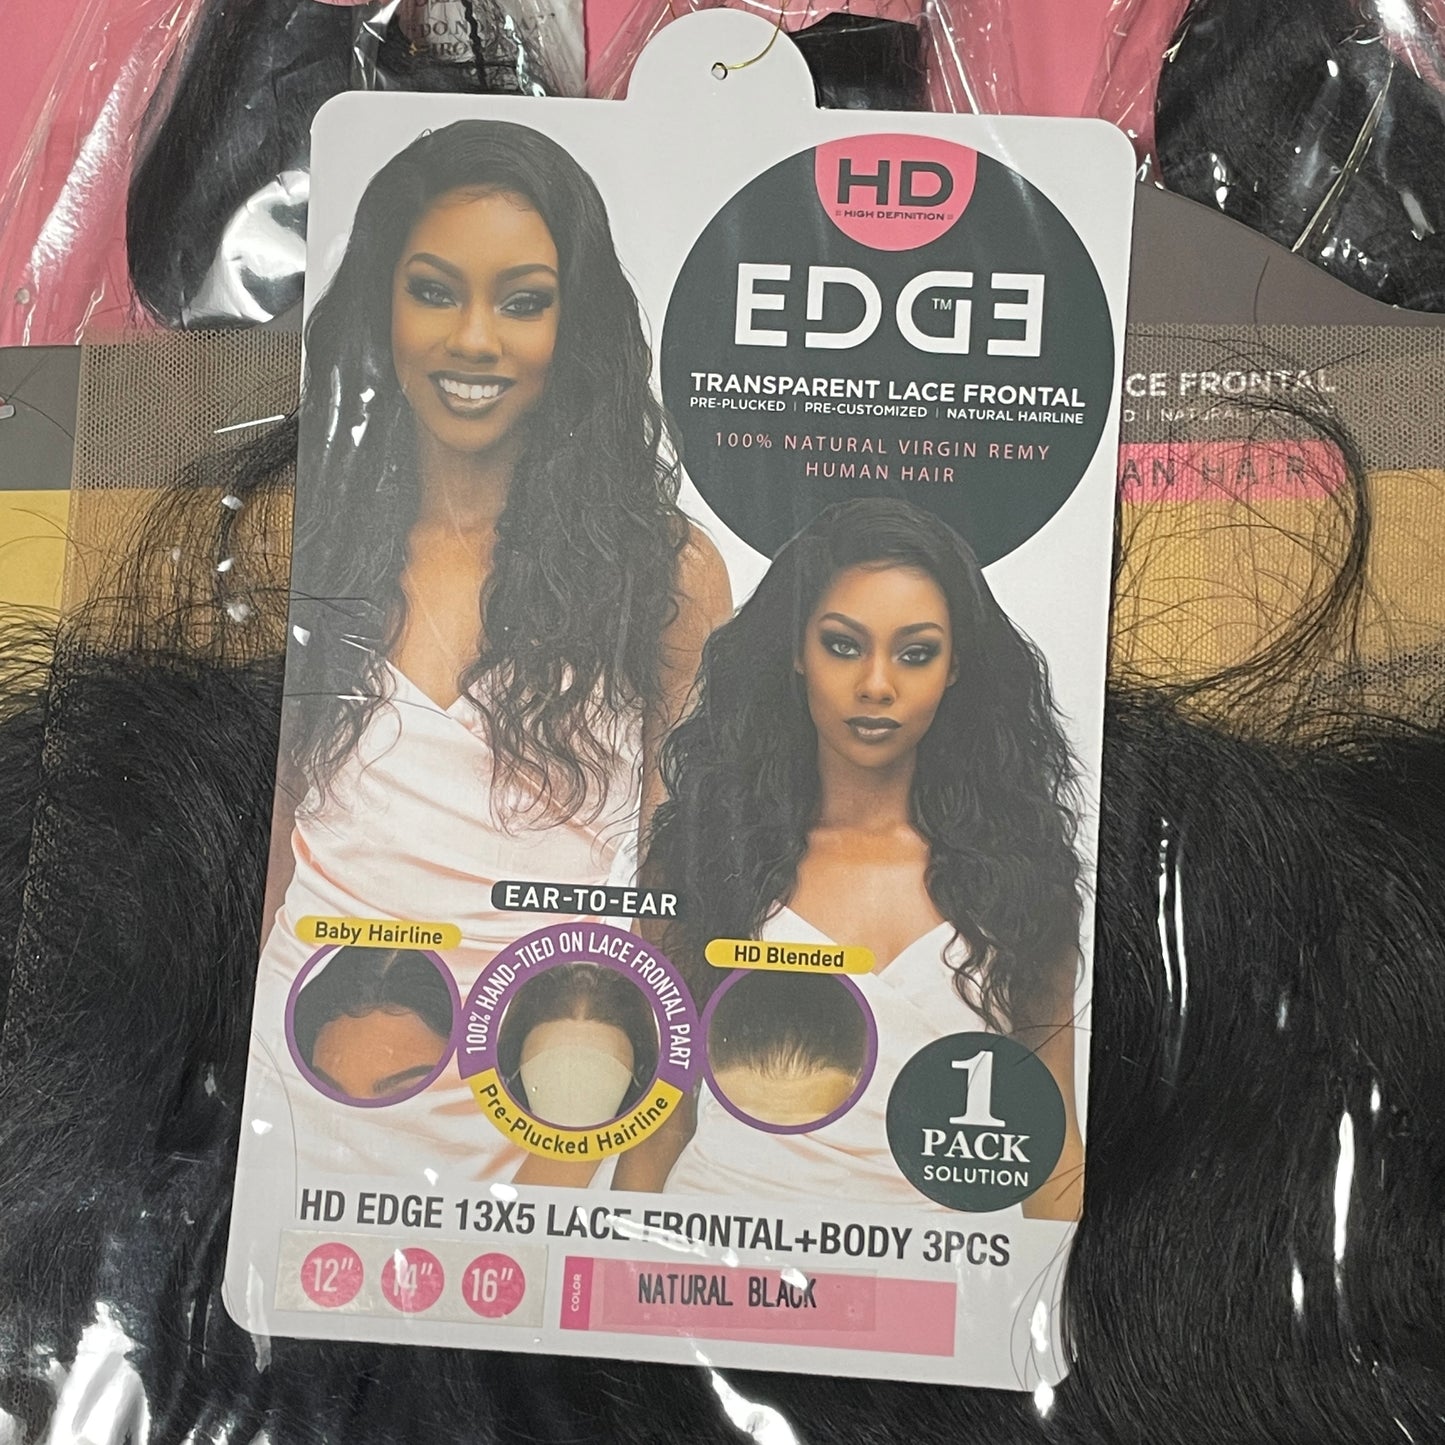 EDGE 100% Natural Virgin Remy Human Hair Transparent Lace Frontal 3pcs (new)